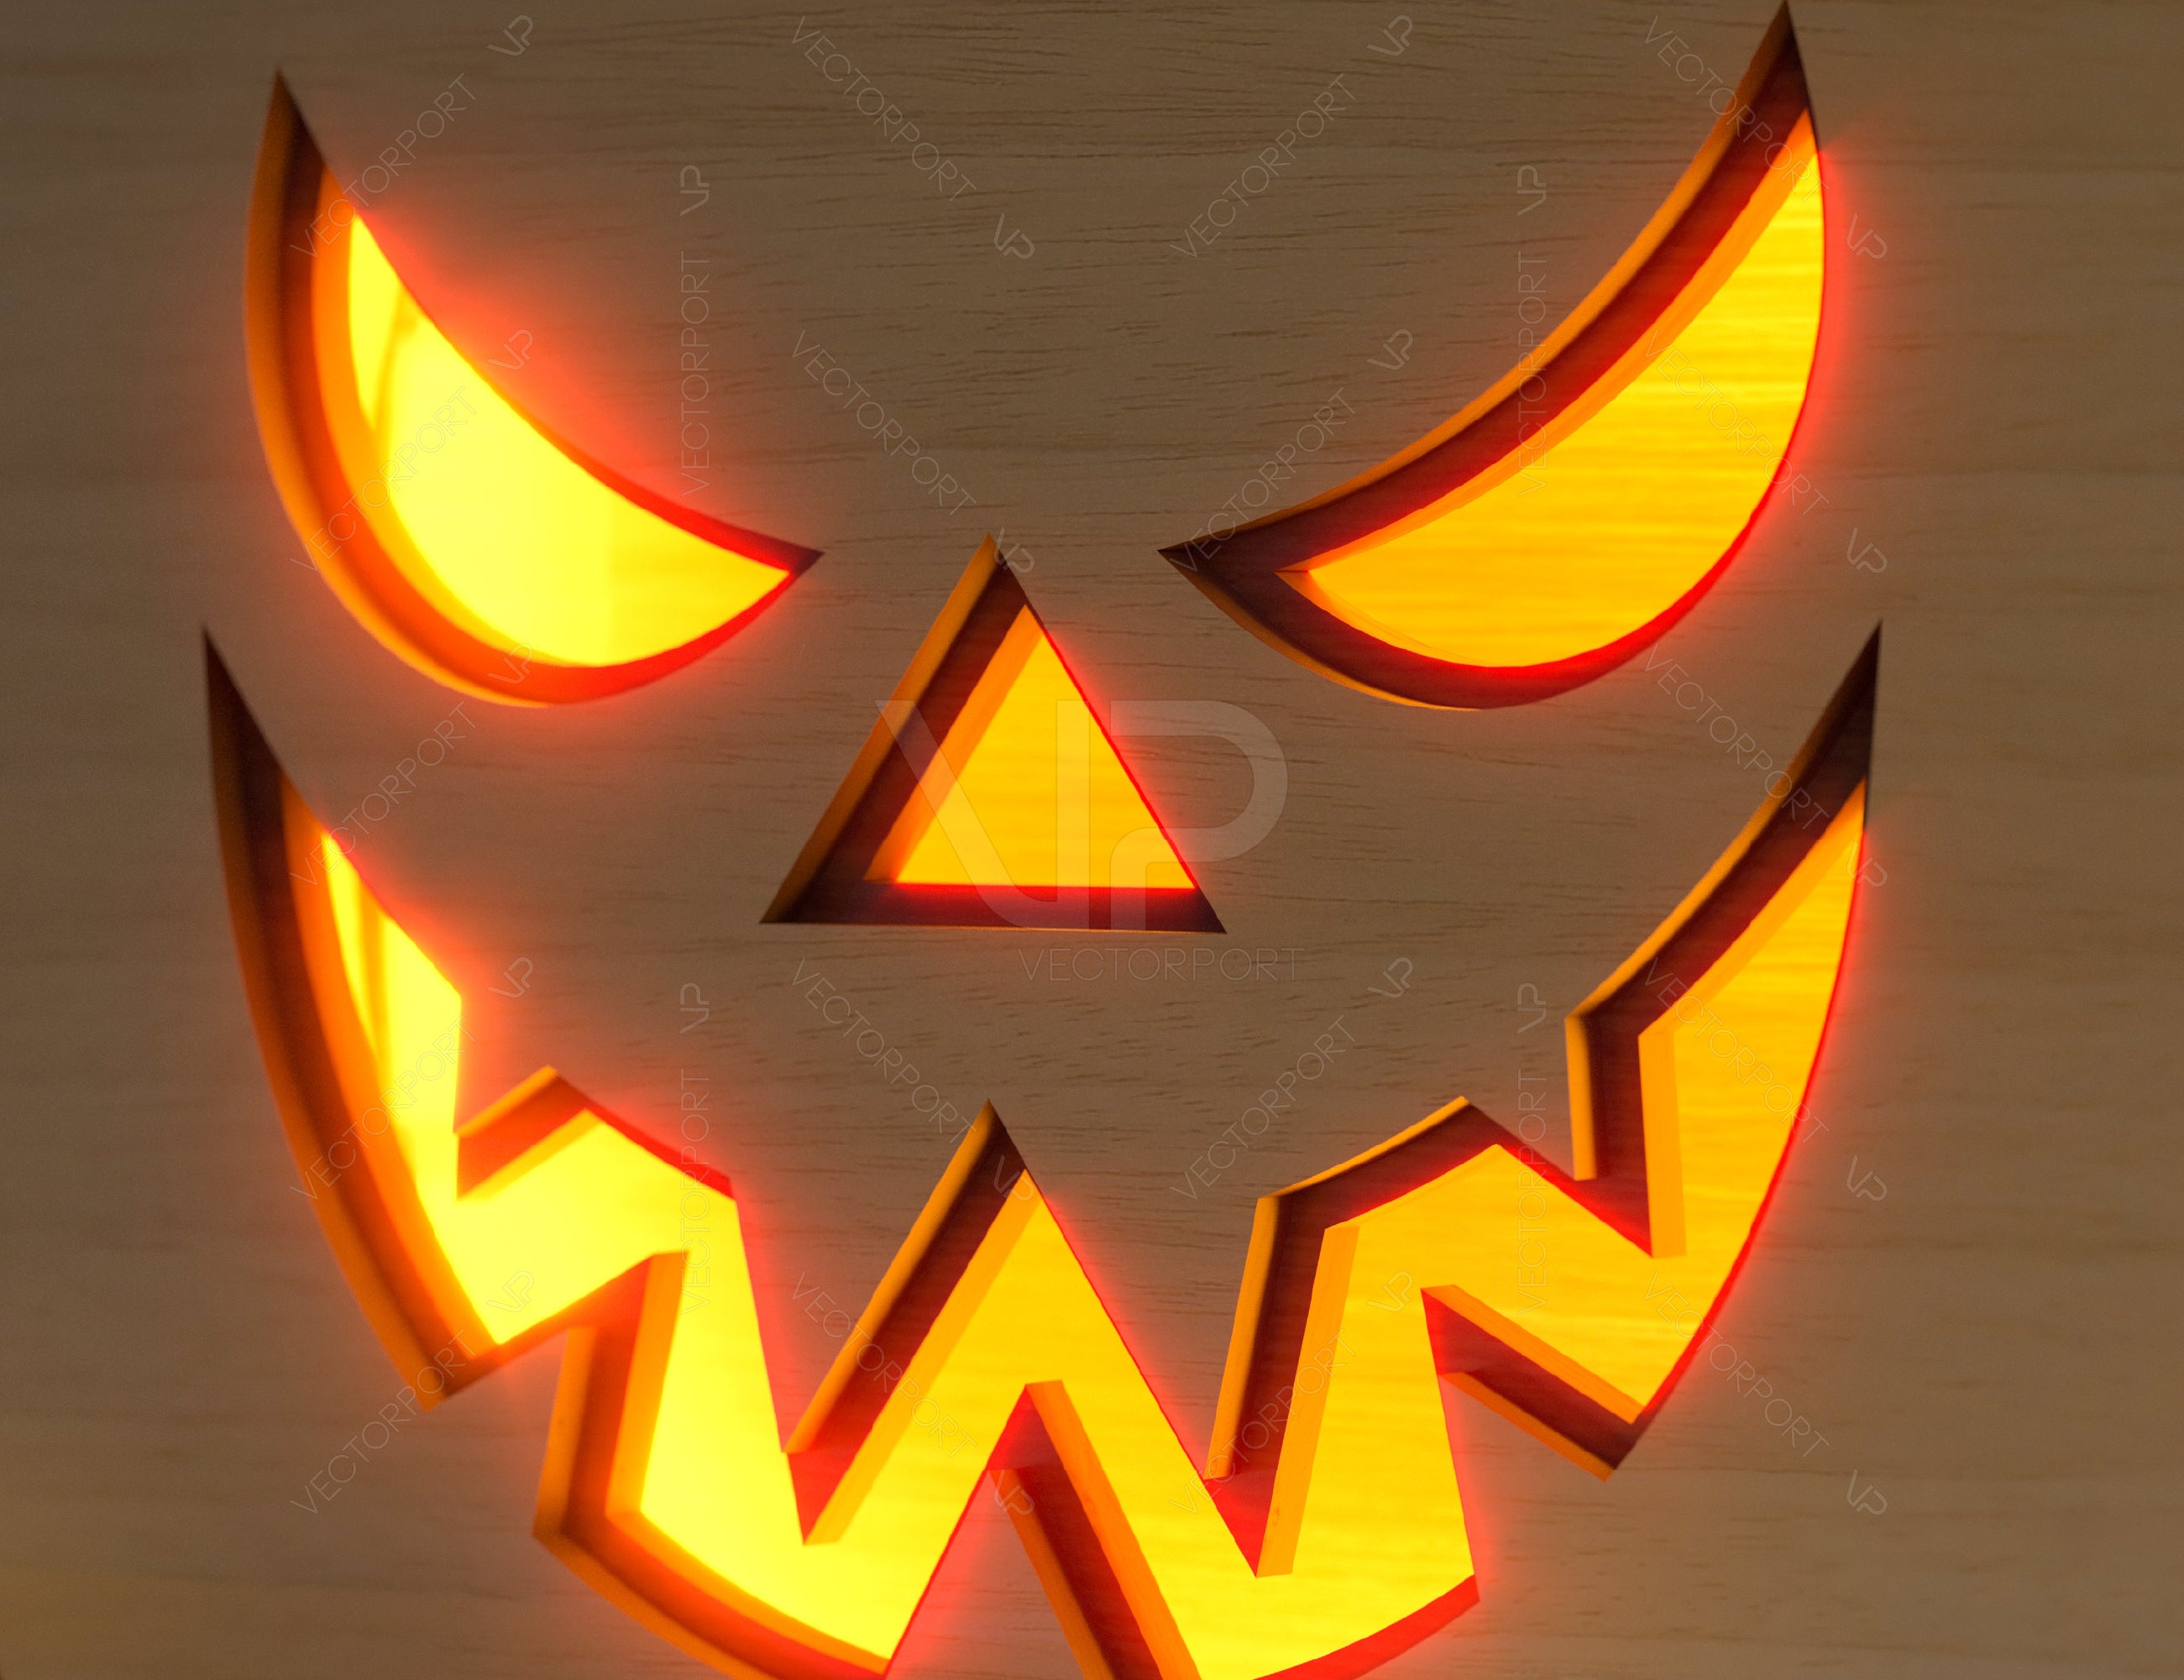 Halloween 3D Pumpkin Night Lamp Laser Cut File Light Box Pumpkin Led Light Digital Download |#U272|